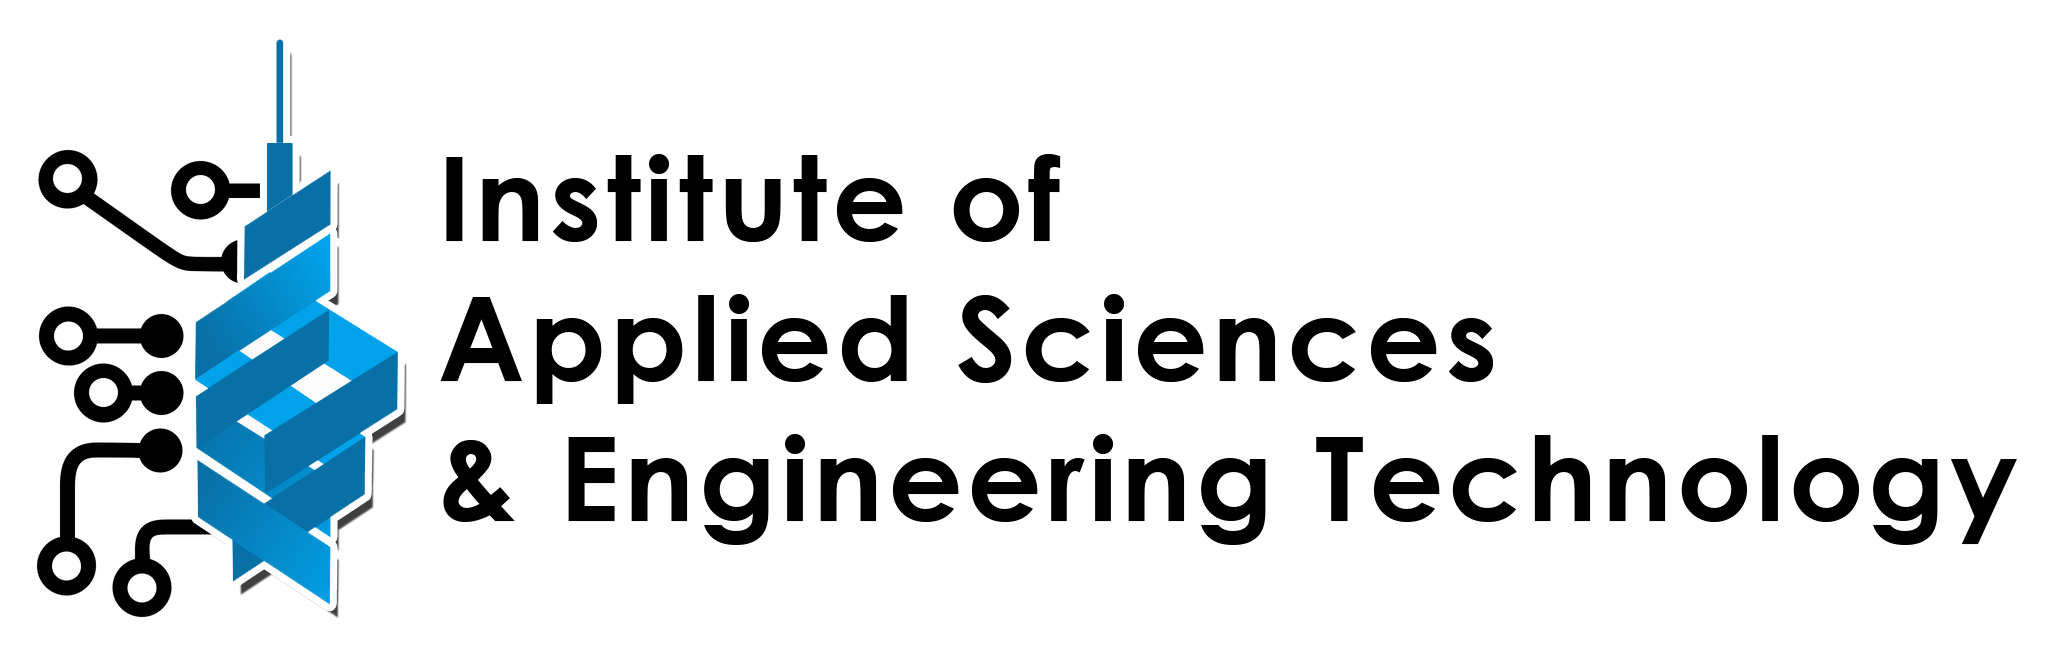 iaet logo